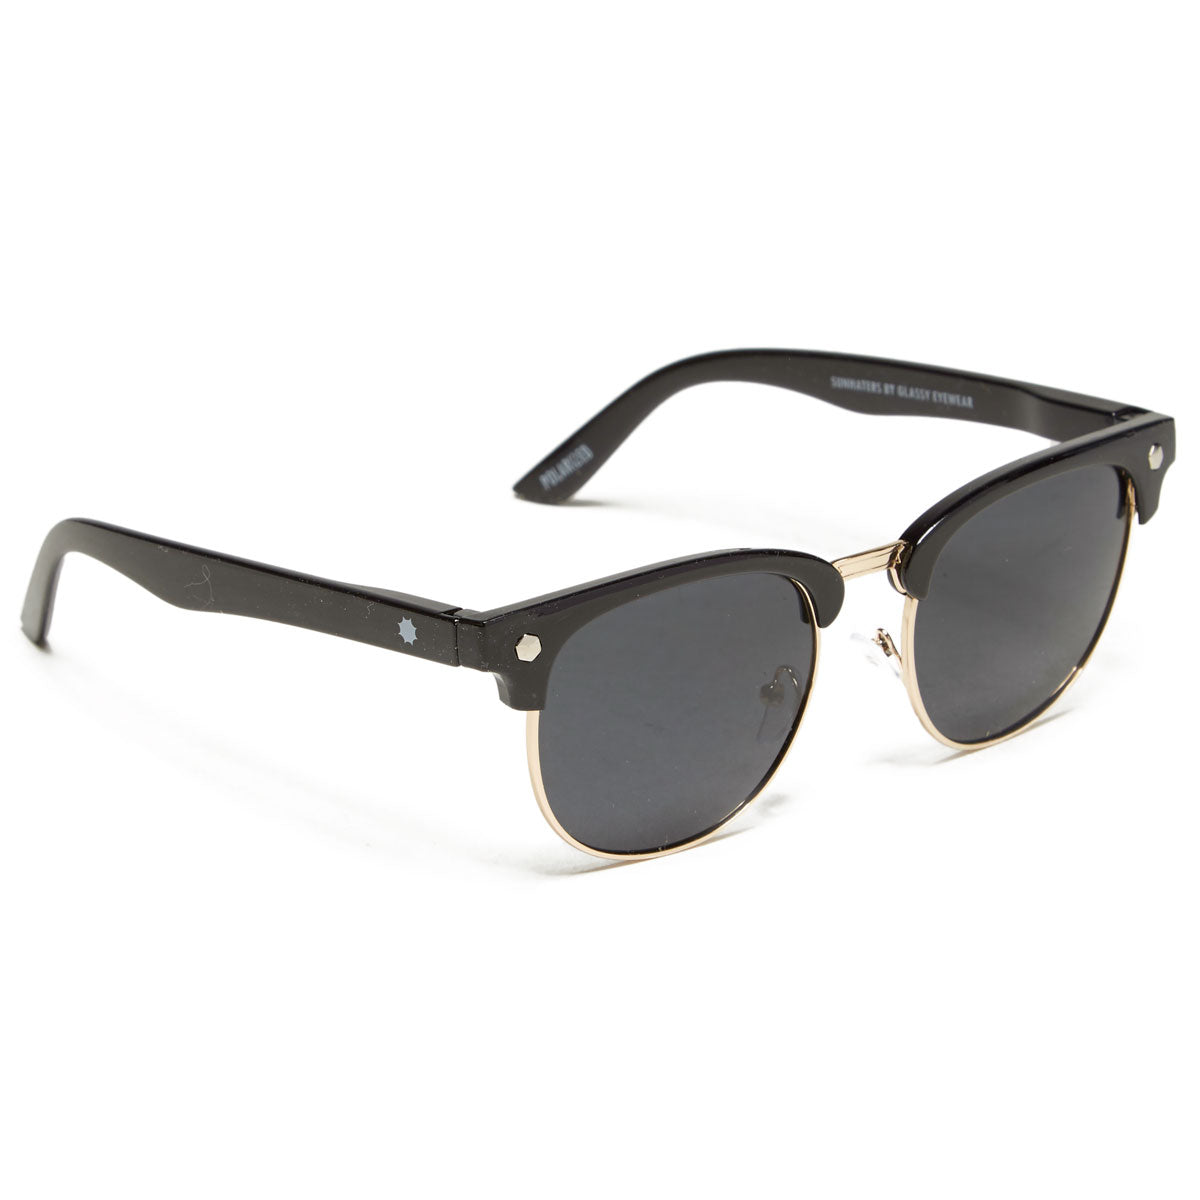 Glassy Morrison Polarized Sunglasses - Black/Gold image 1